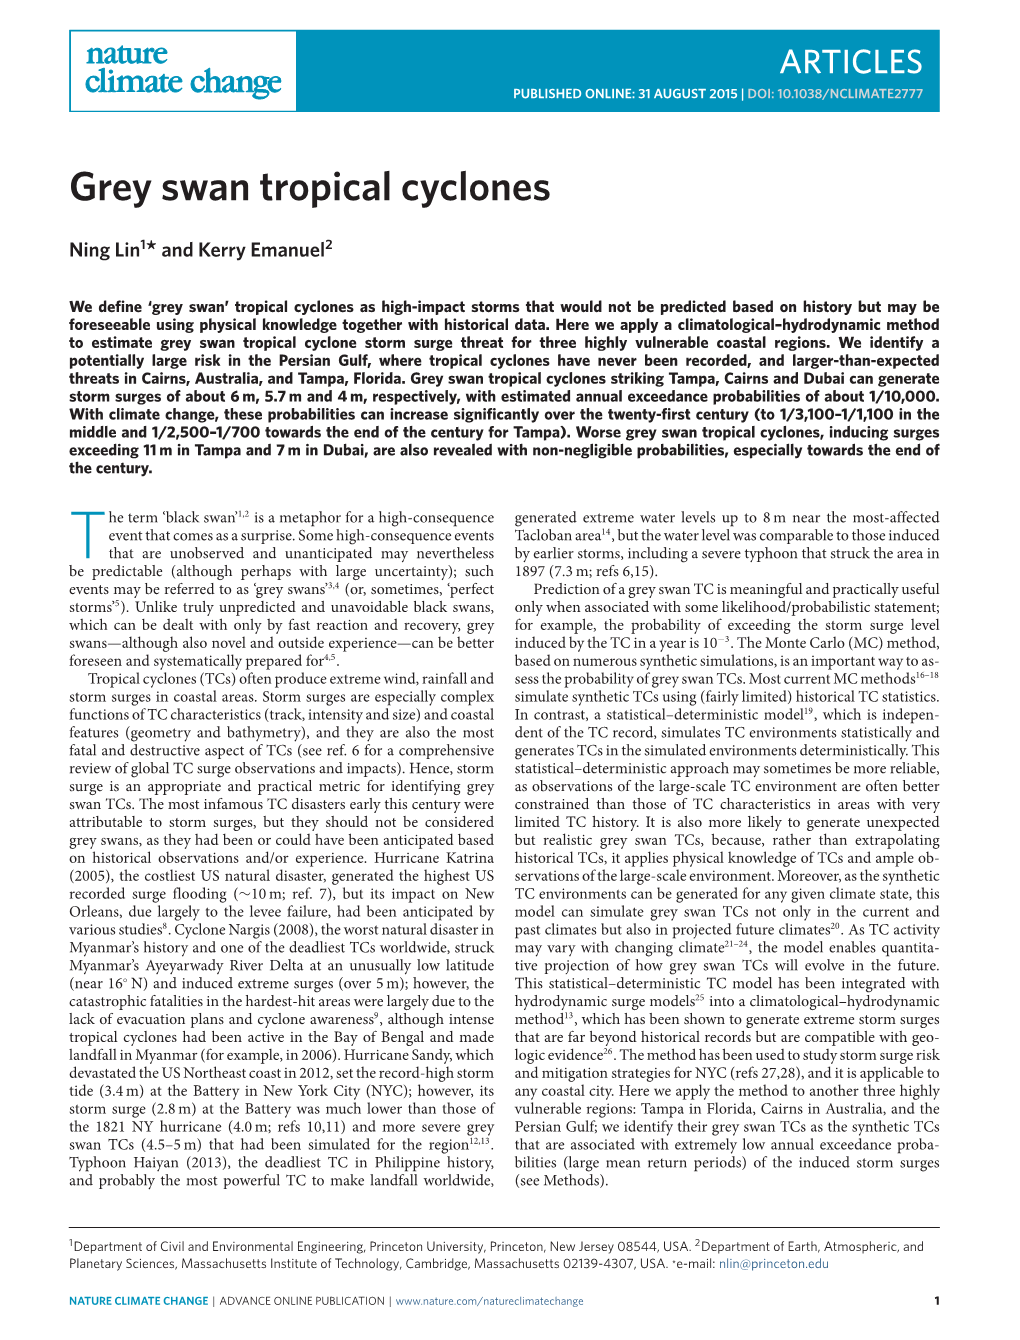 Grey Swan Tropical Cyclones